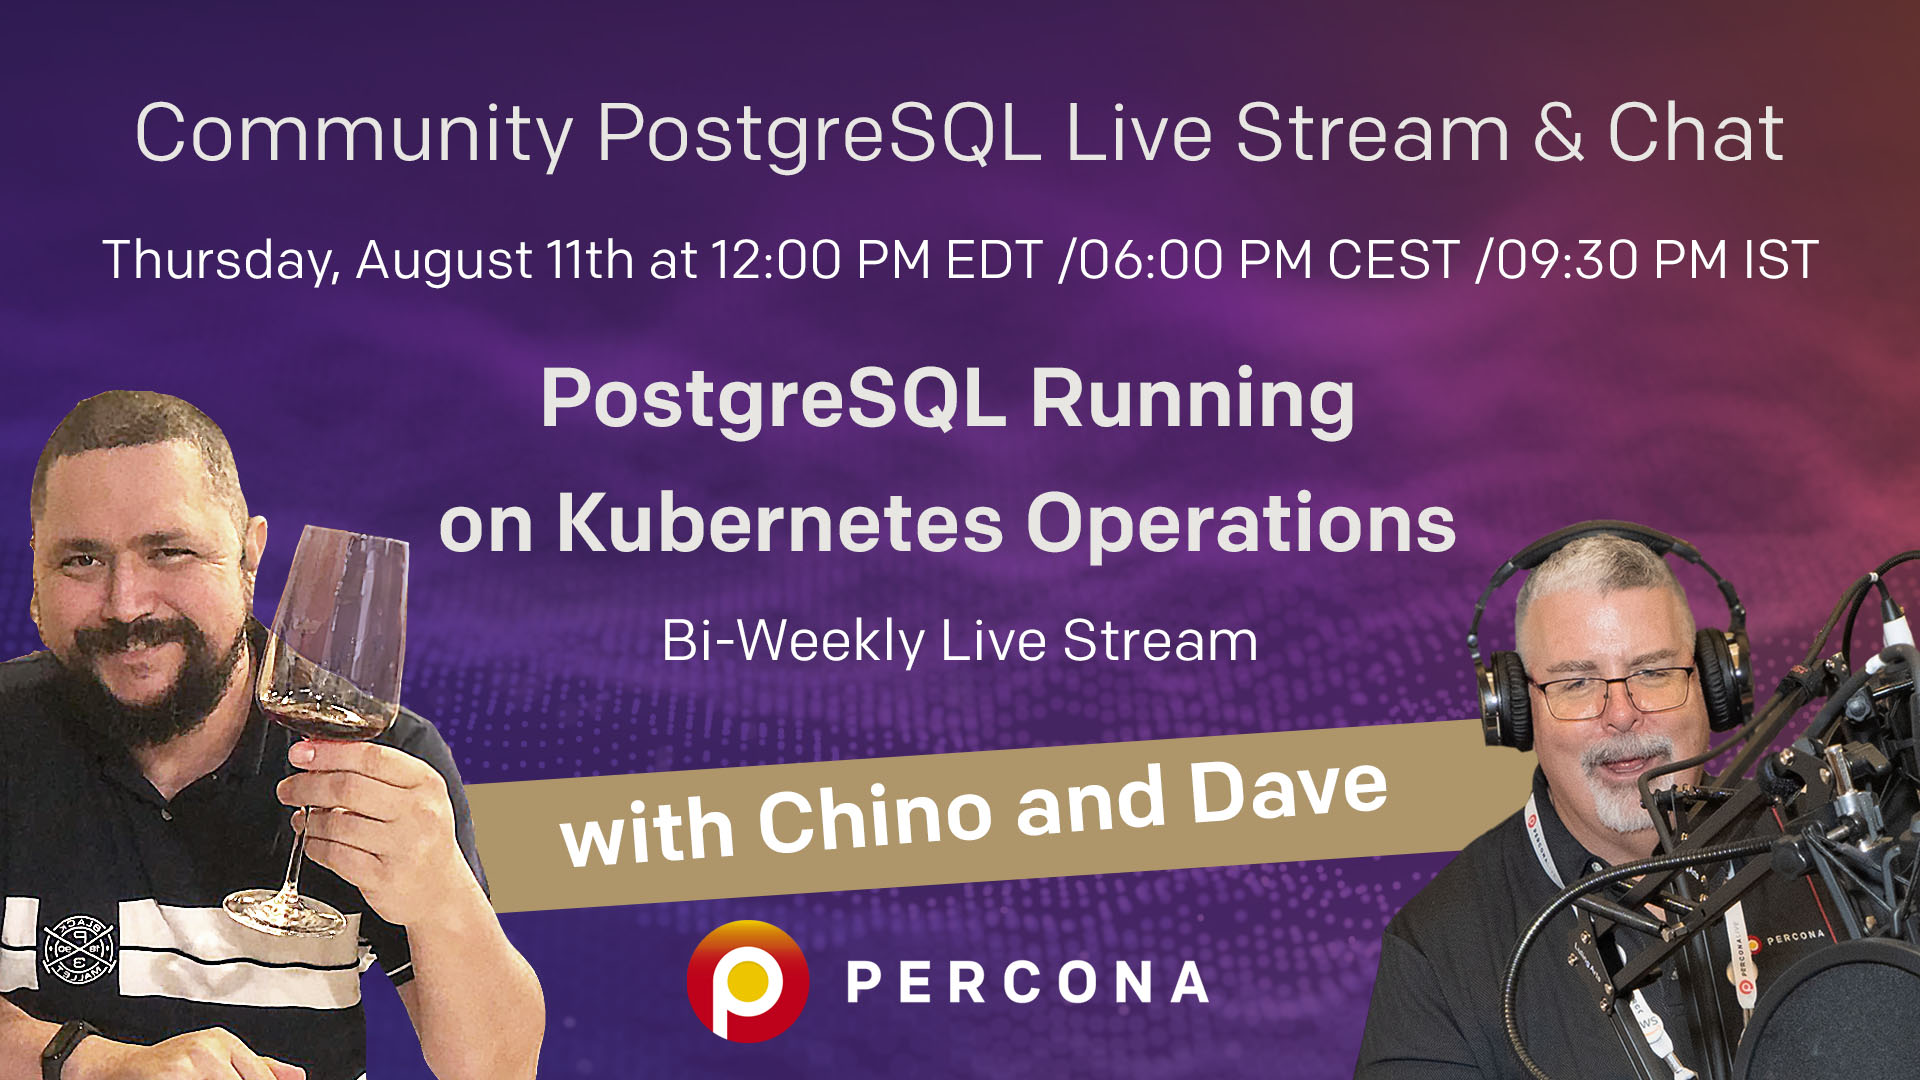 Percona Community PostgreSQL Live Stream & Chat - August 11th